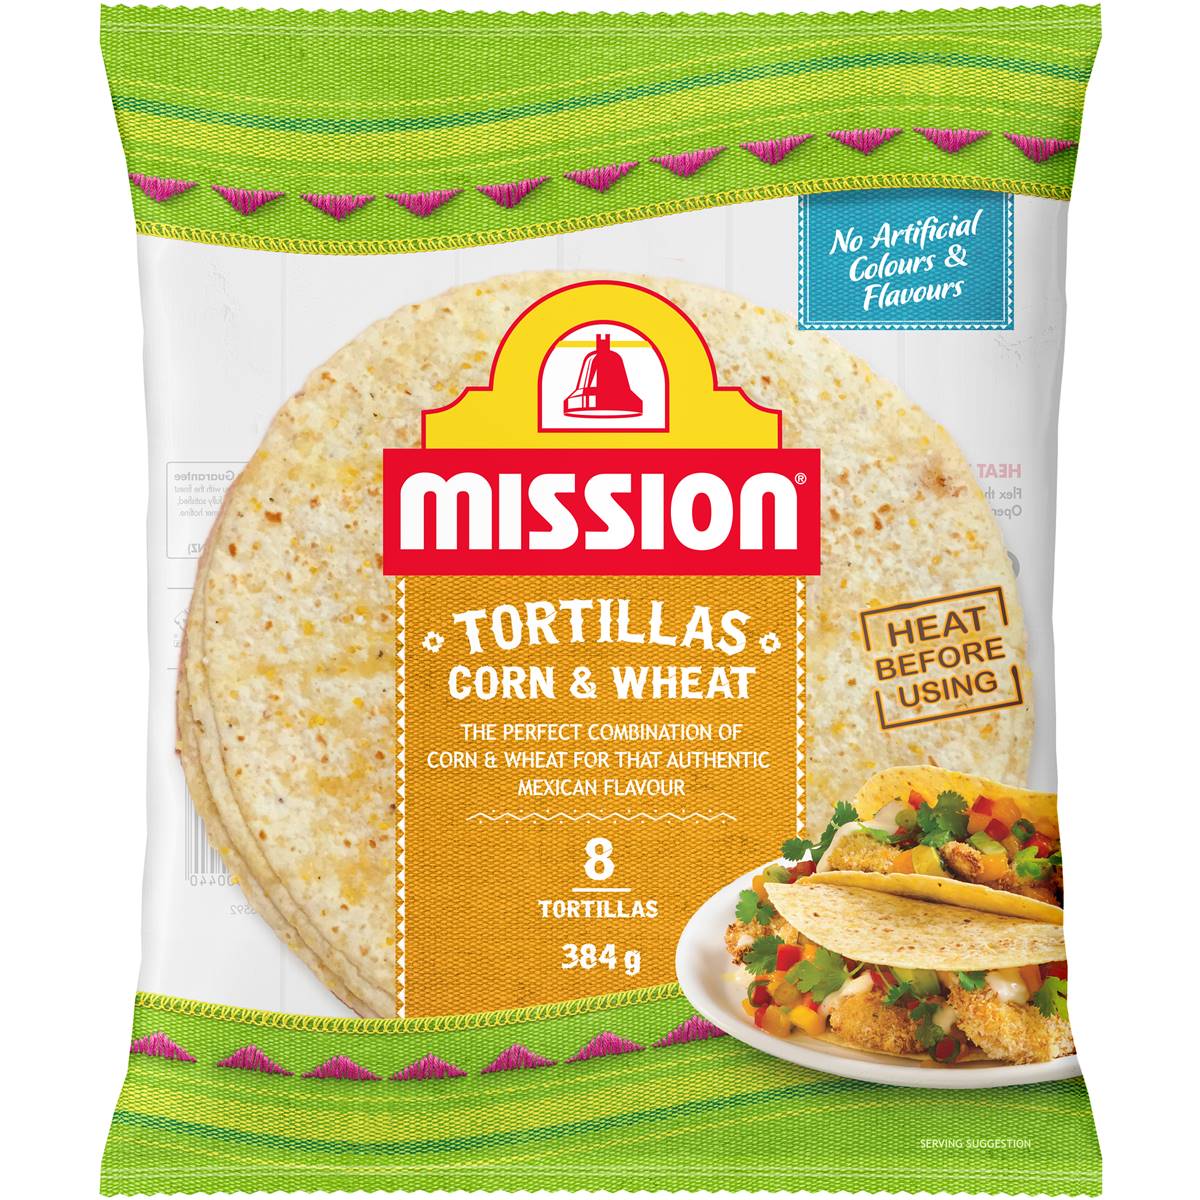 Calories in Mission Corn & Wheat Tortillas